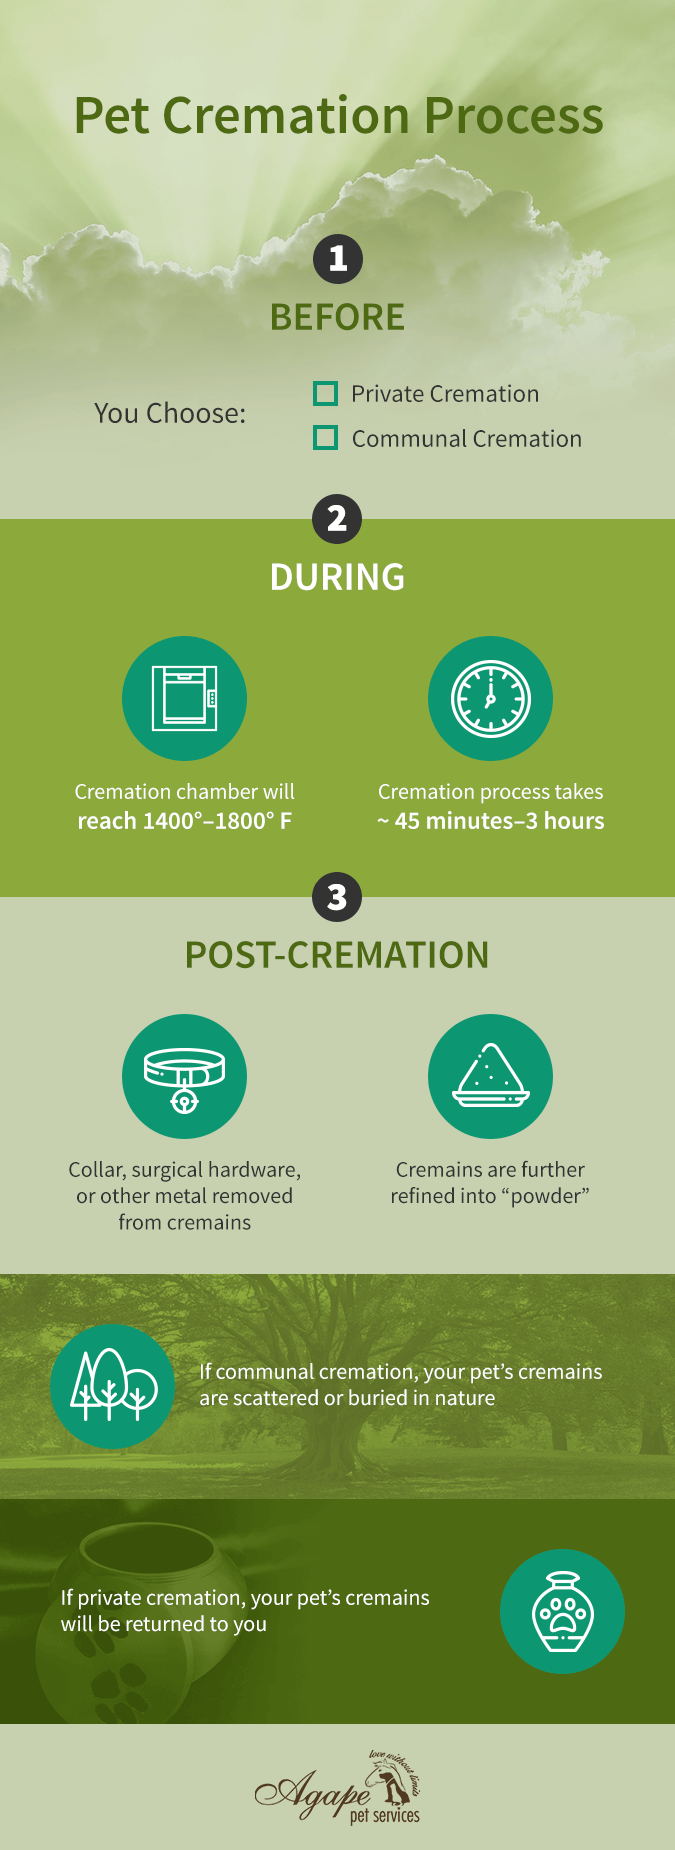 Pet Cremation Process